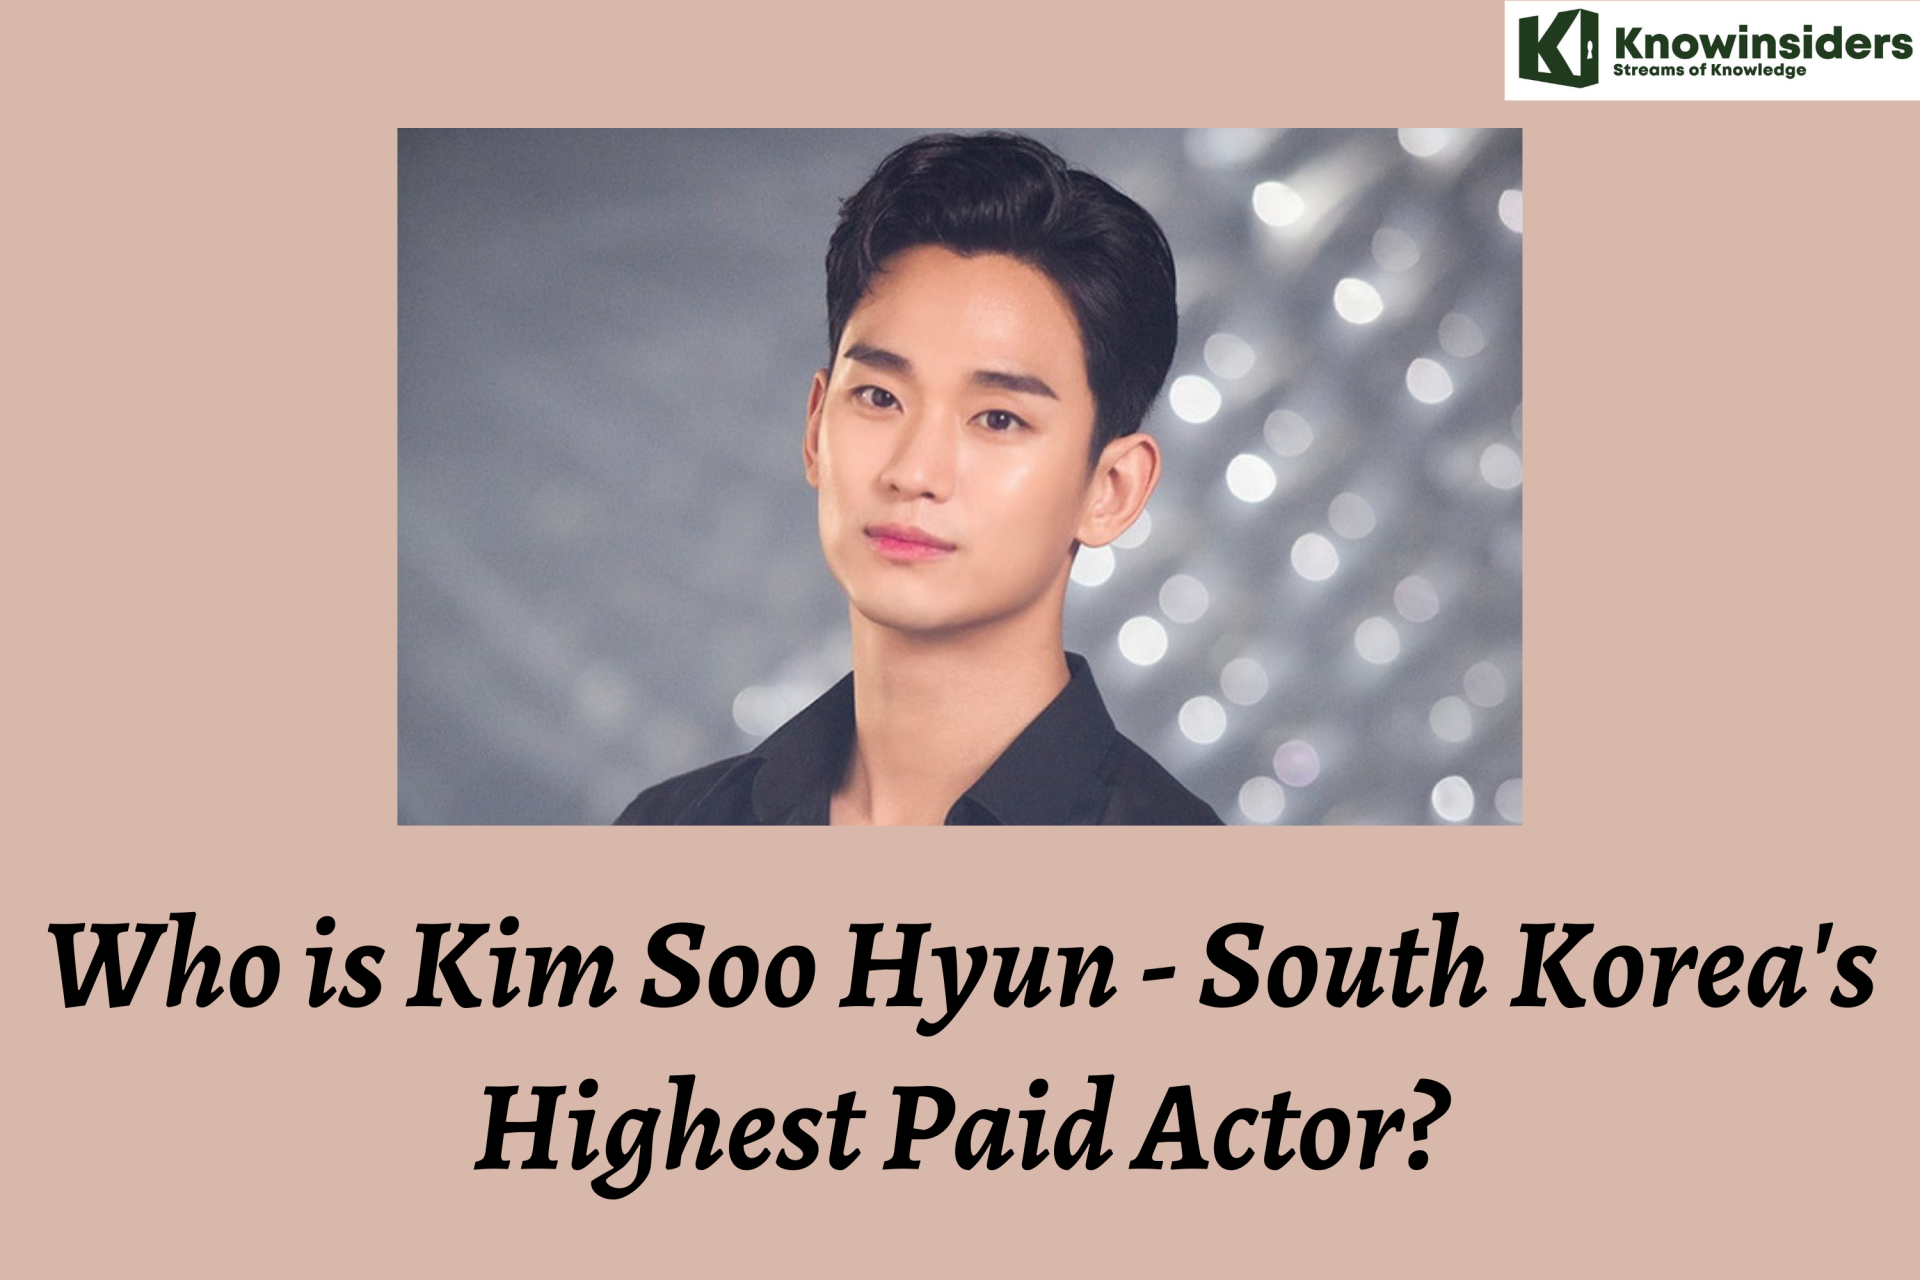 Who is Kim Soo Hyun - South Korea's Highest Paid Actor?